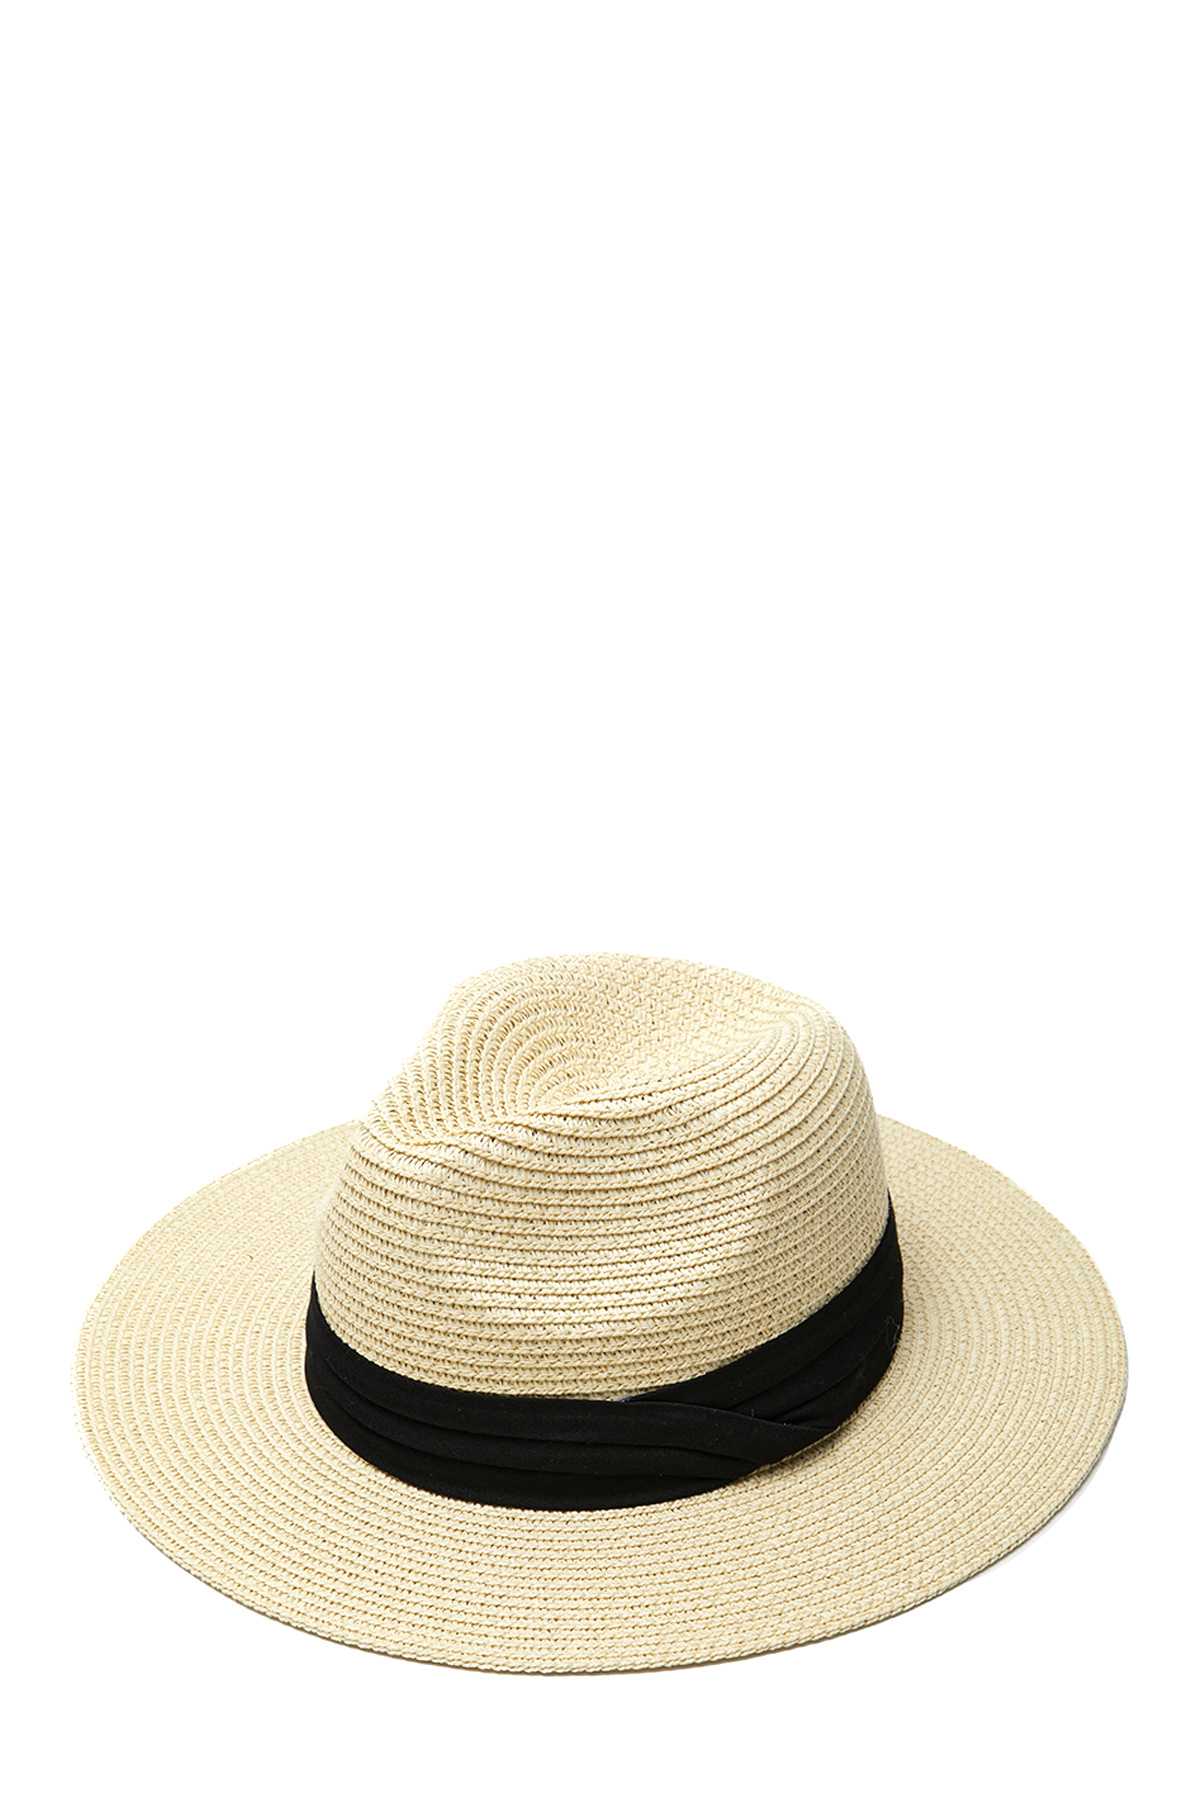 Black Band Fedora Straw Hat